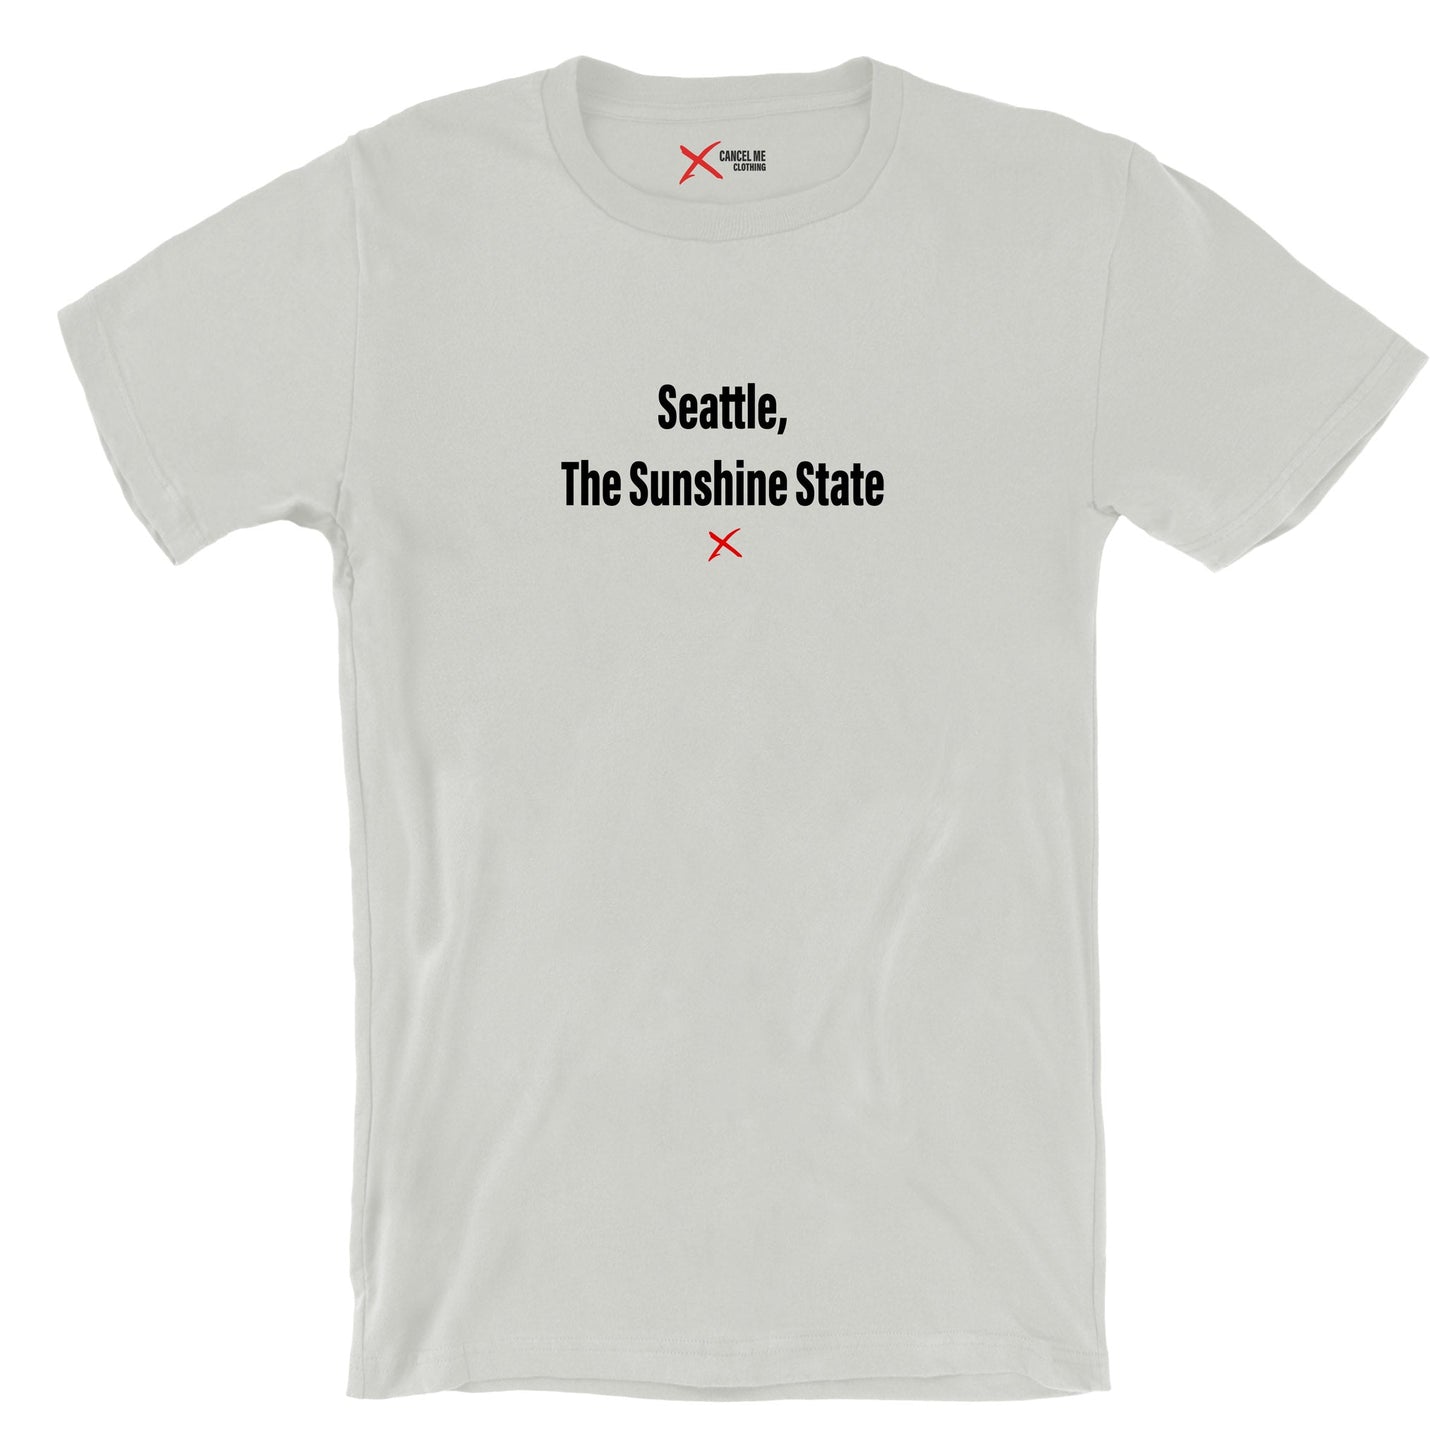 Seattle, The Sunshine State - Shirt